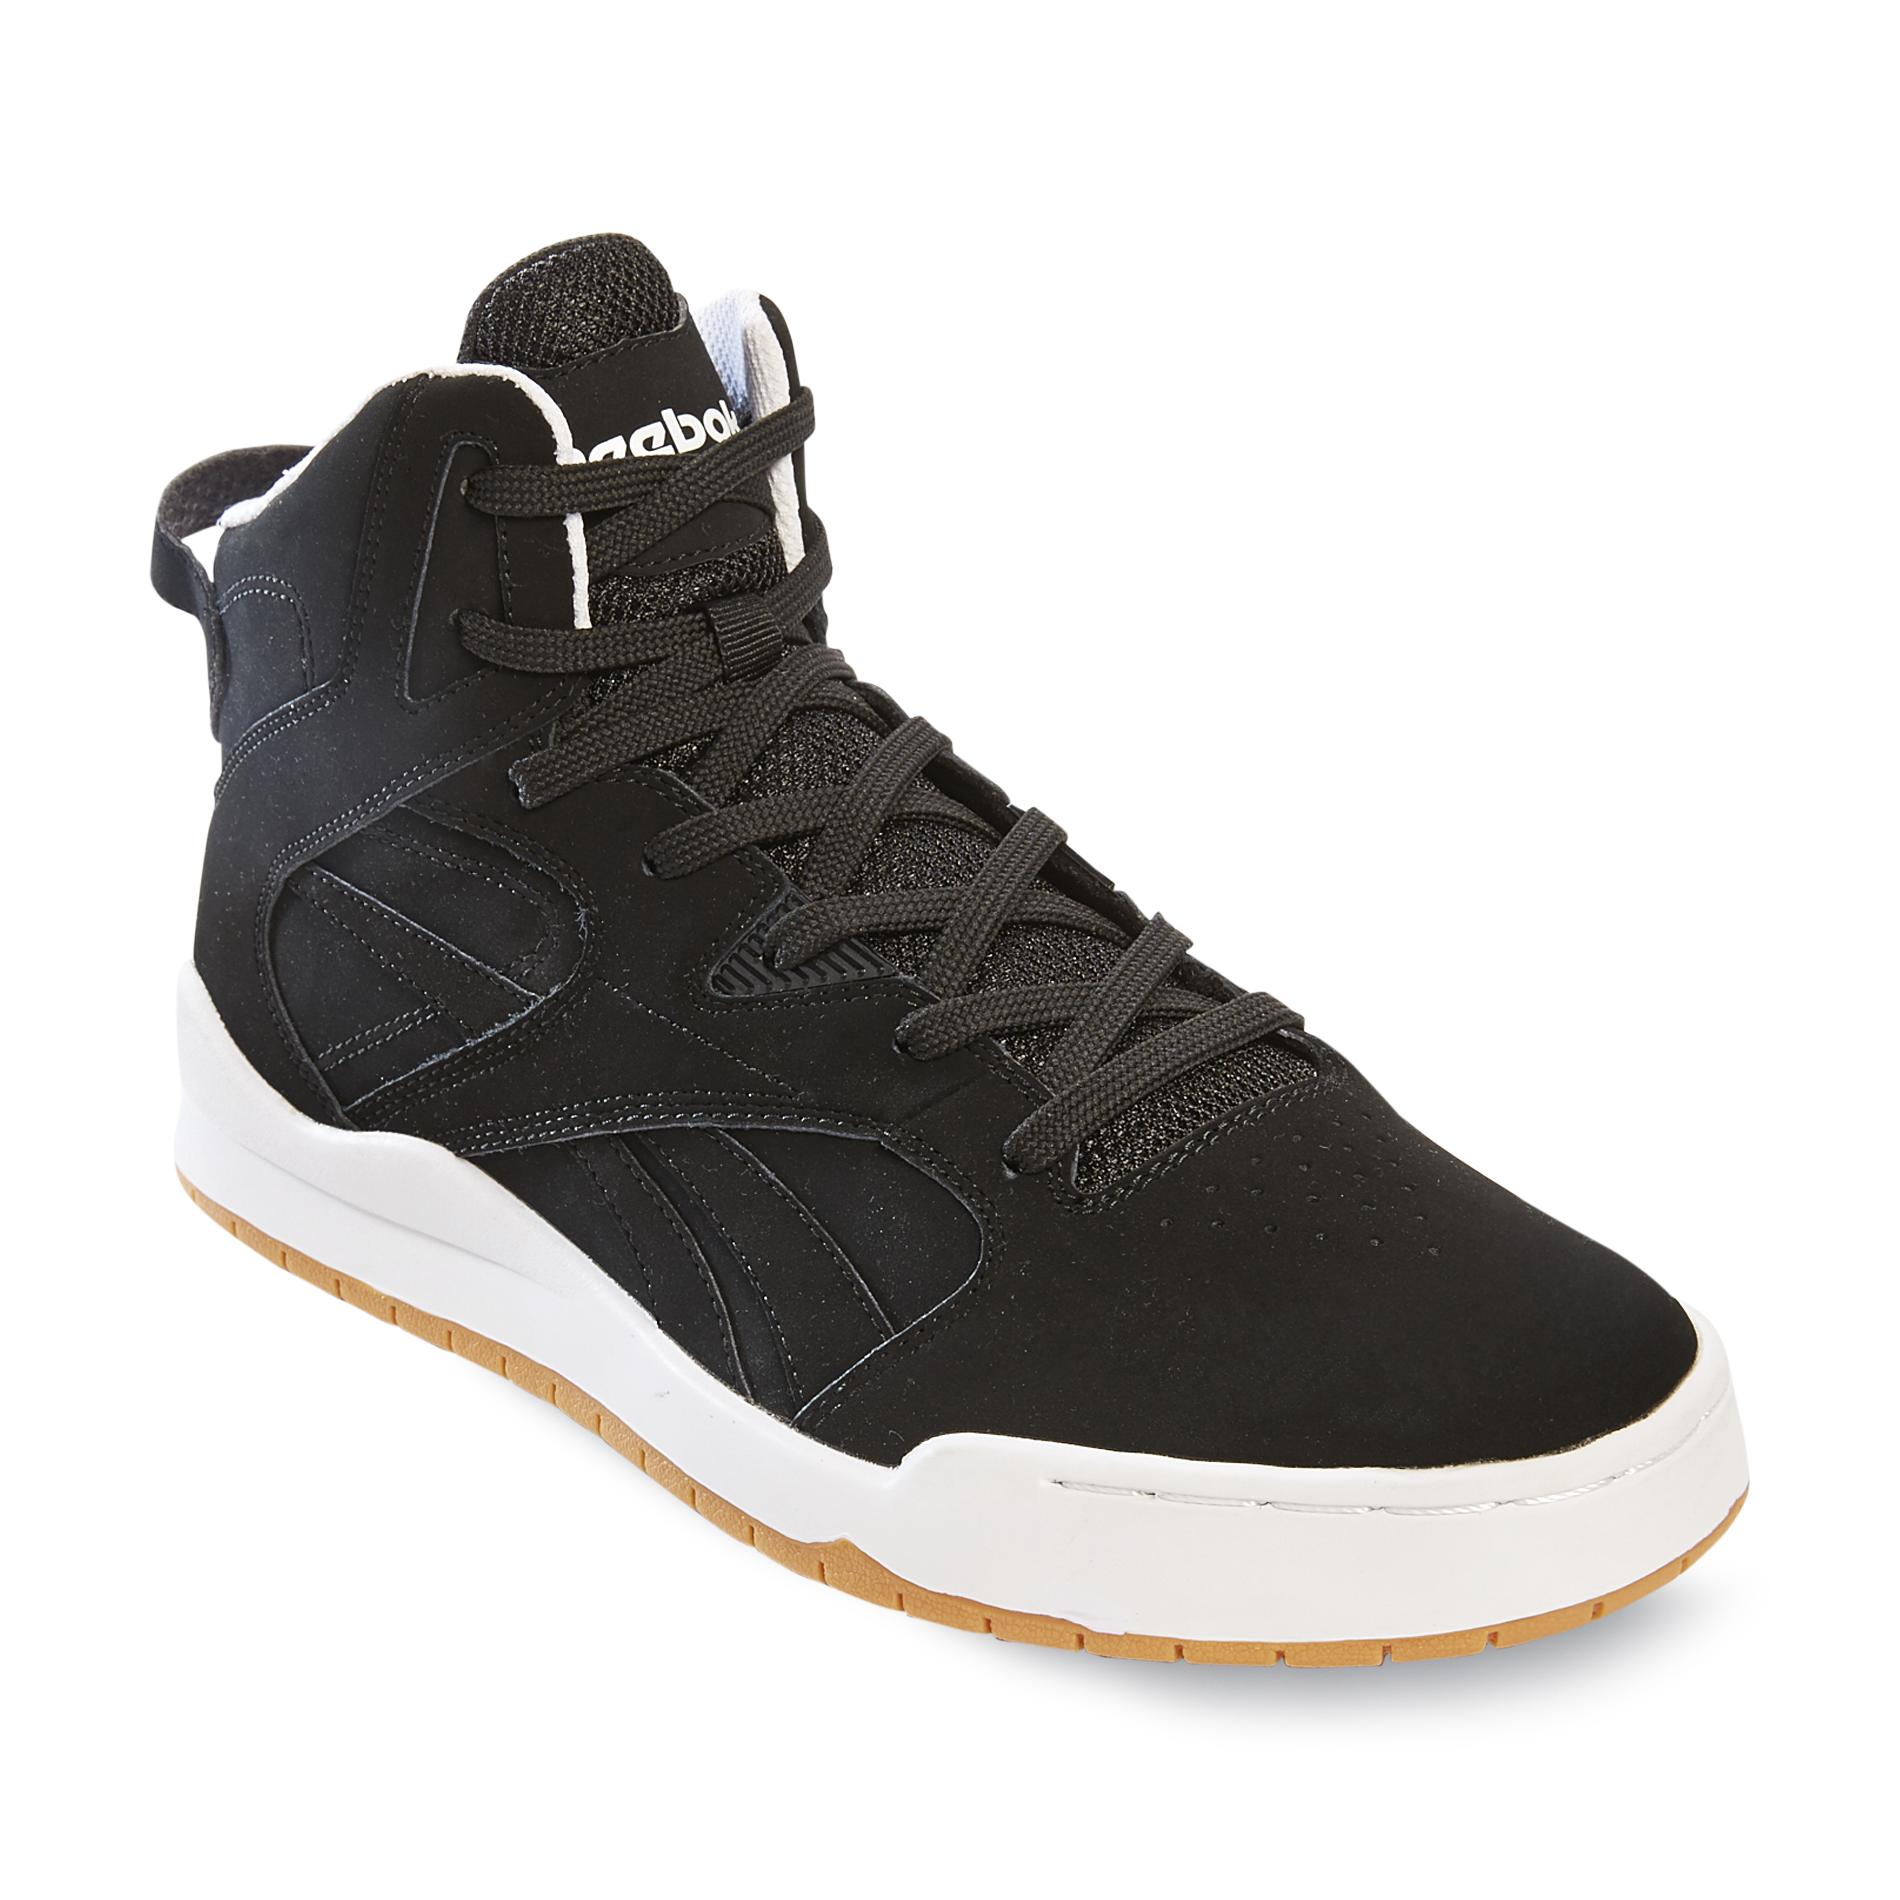 Reebok Men's BB4700 Basketball Athletic Shoe - Black/White